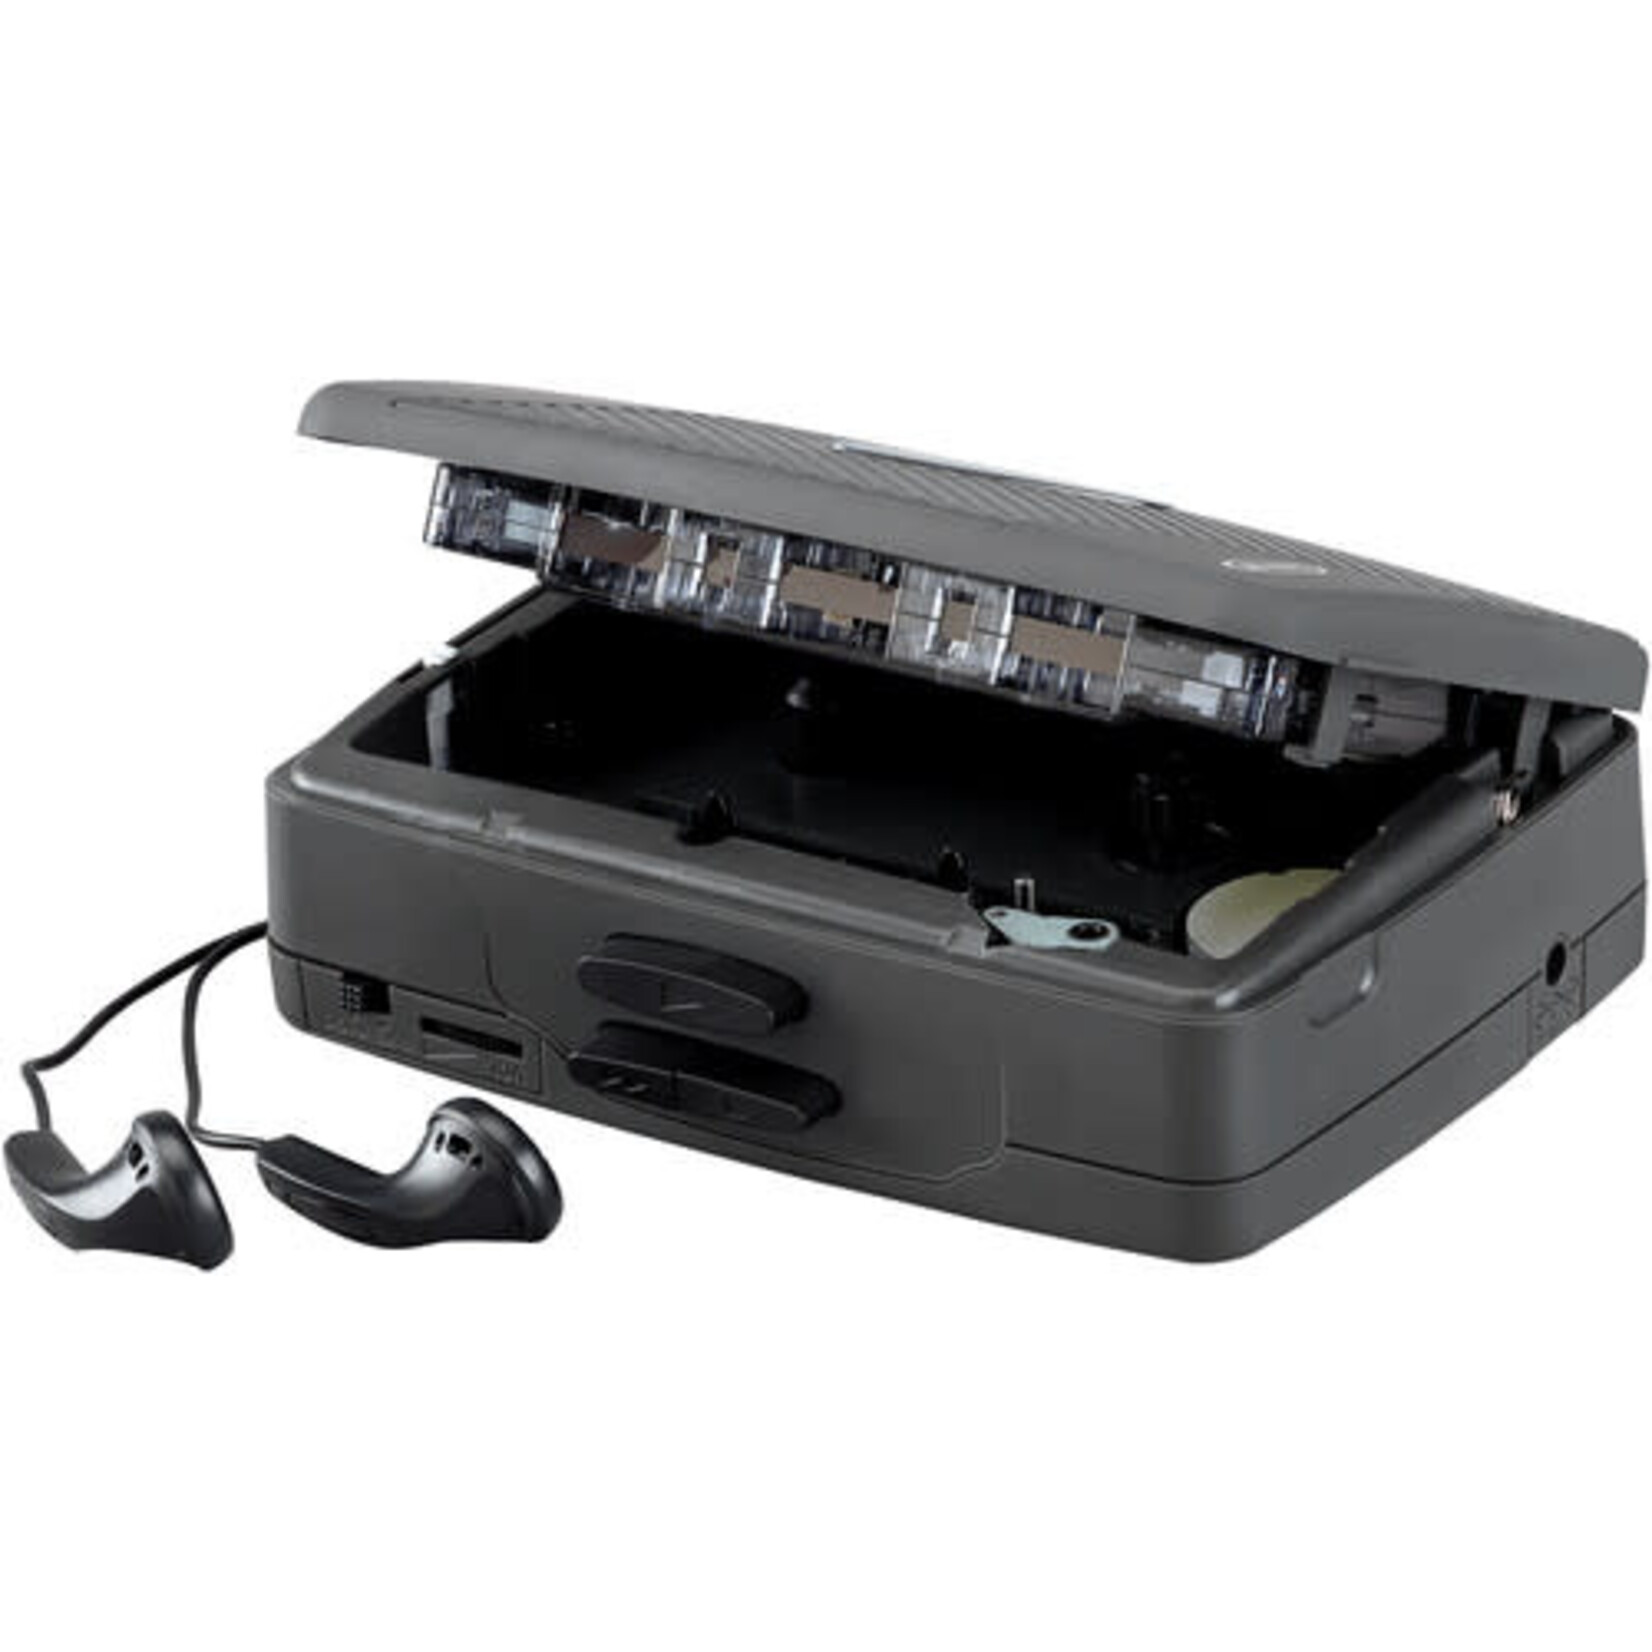 Jensen SCR-75 Personal Stereo Cassette Player [Black]